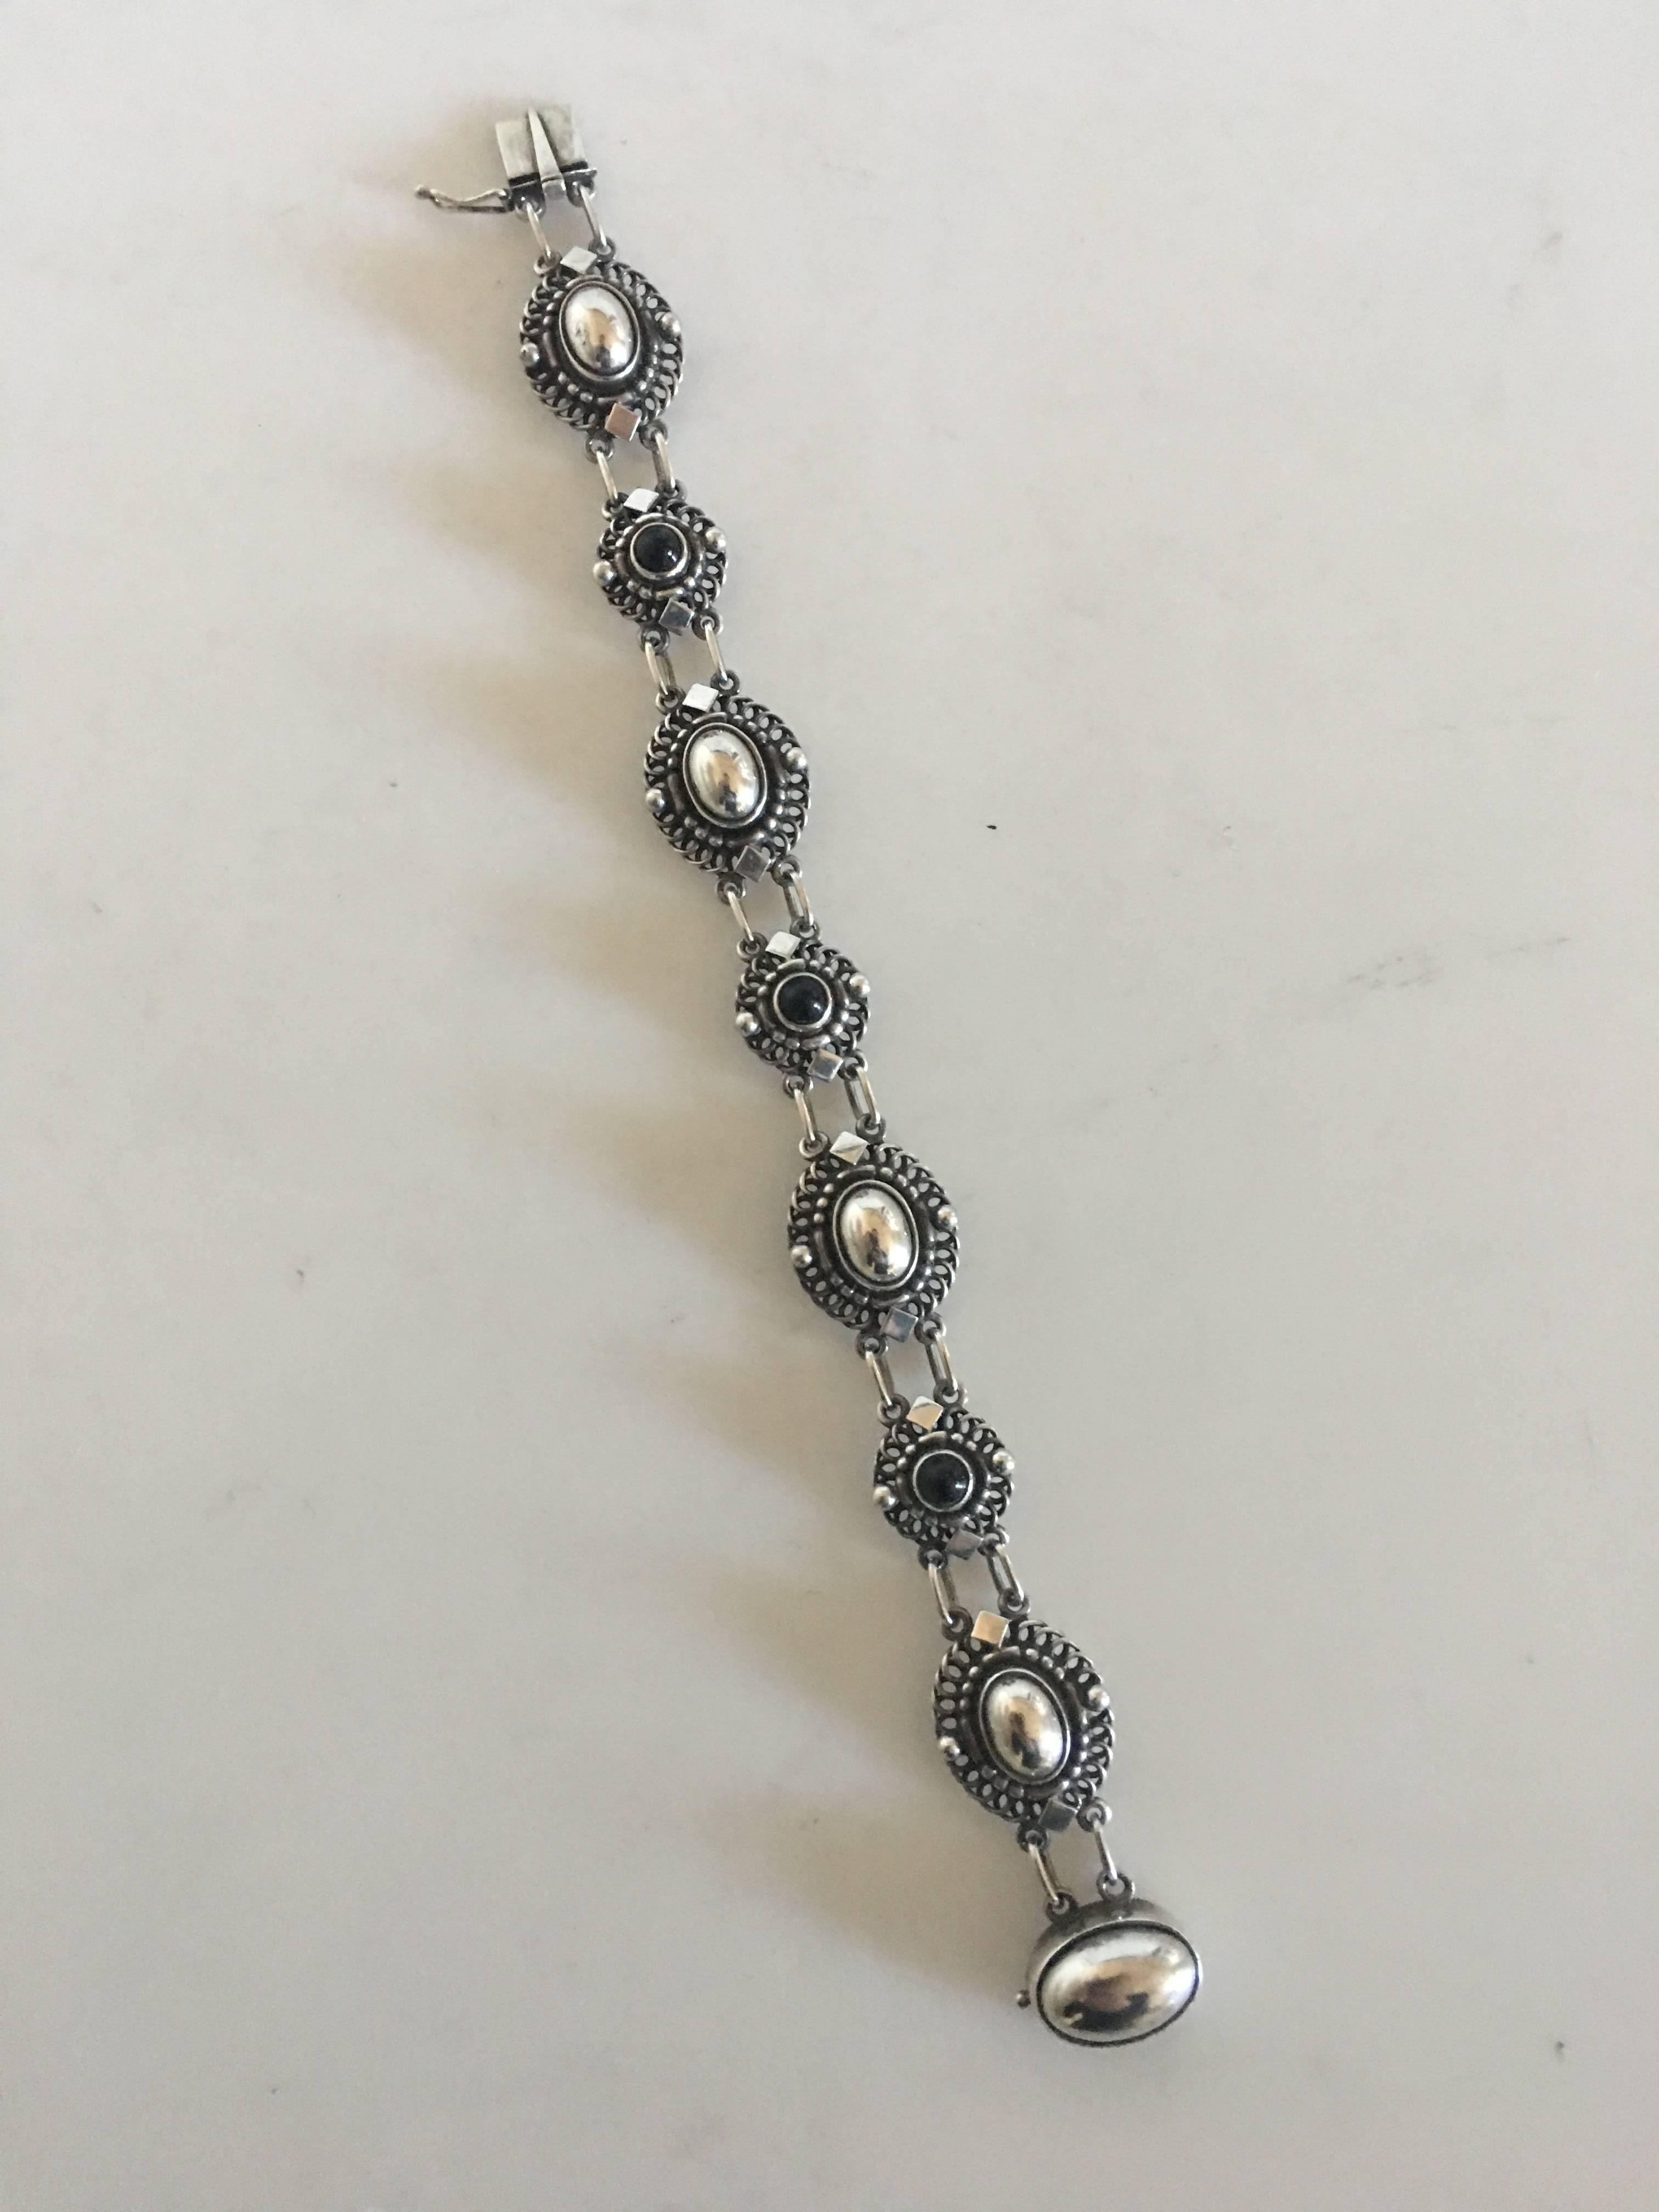 Georg Jensen Sterling Silver Bracelet No. 419 with Black Onyx Stones. Measures 19.5 cm L (7 43/64